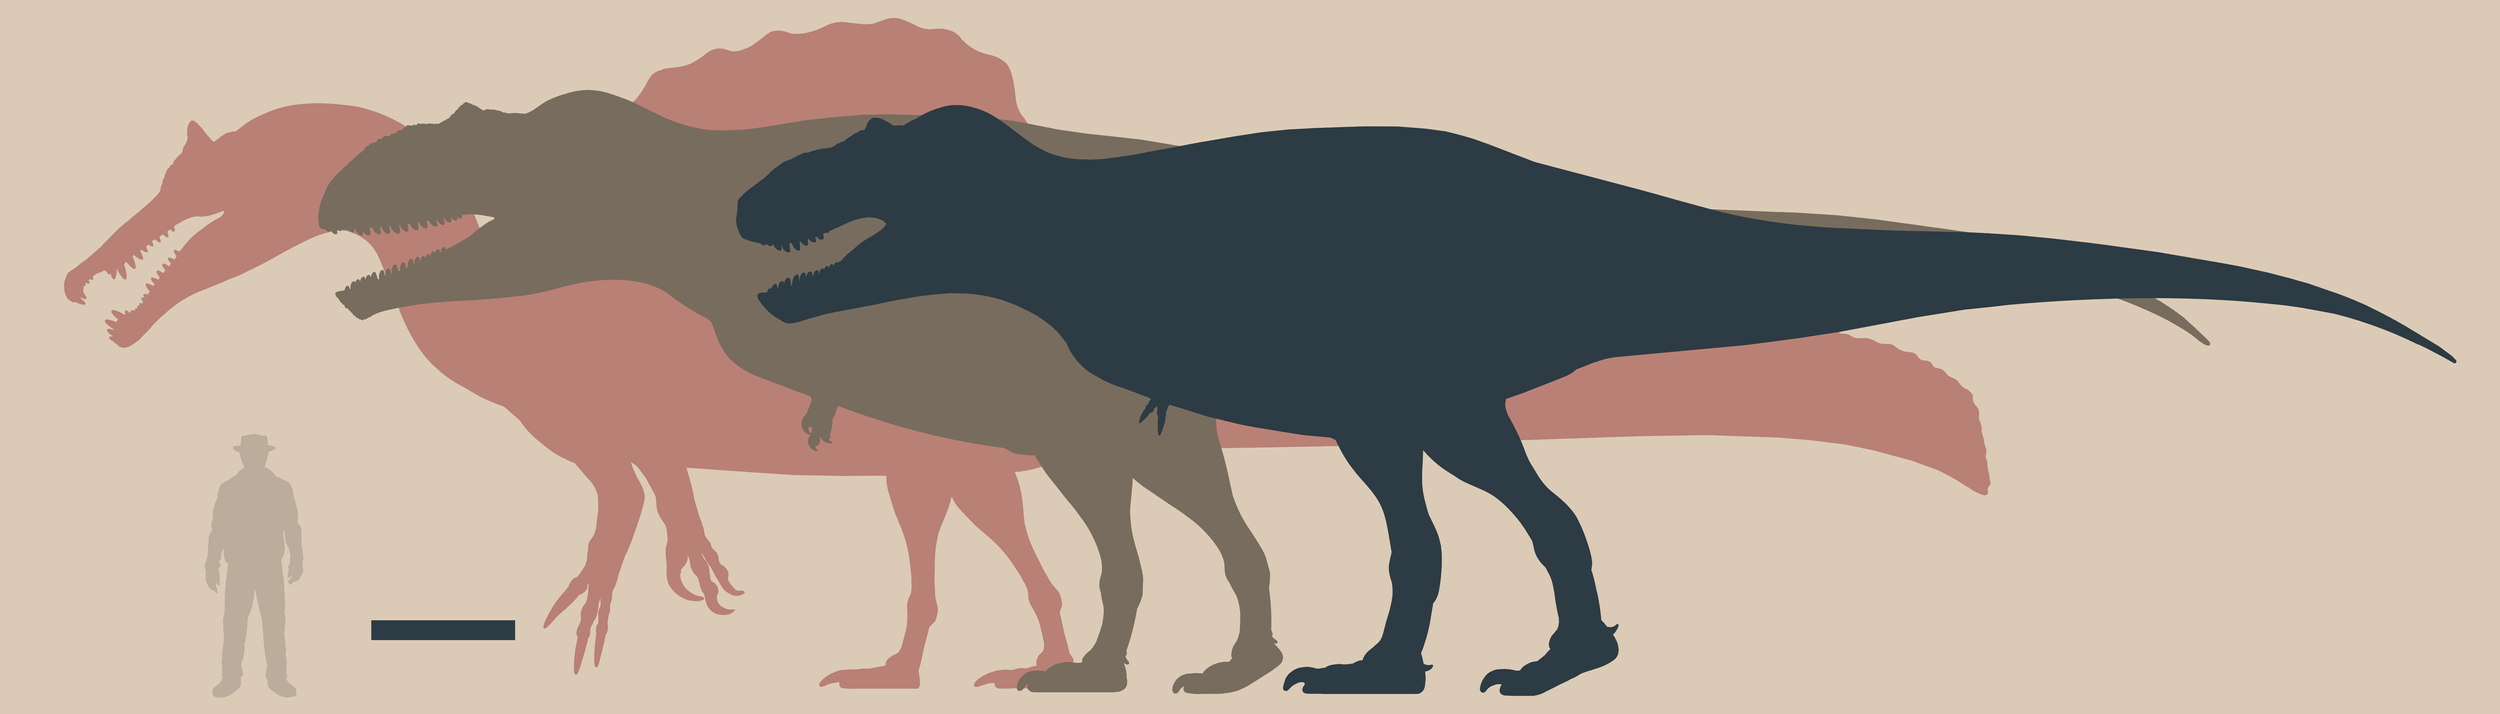 Tyrannosaurus rex - Página 5 Image+%2835%29